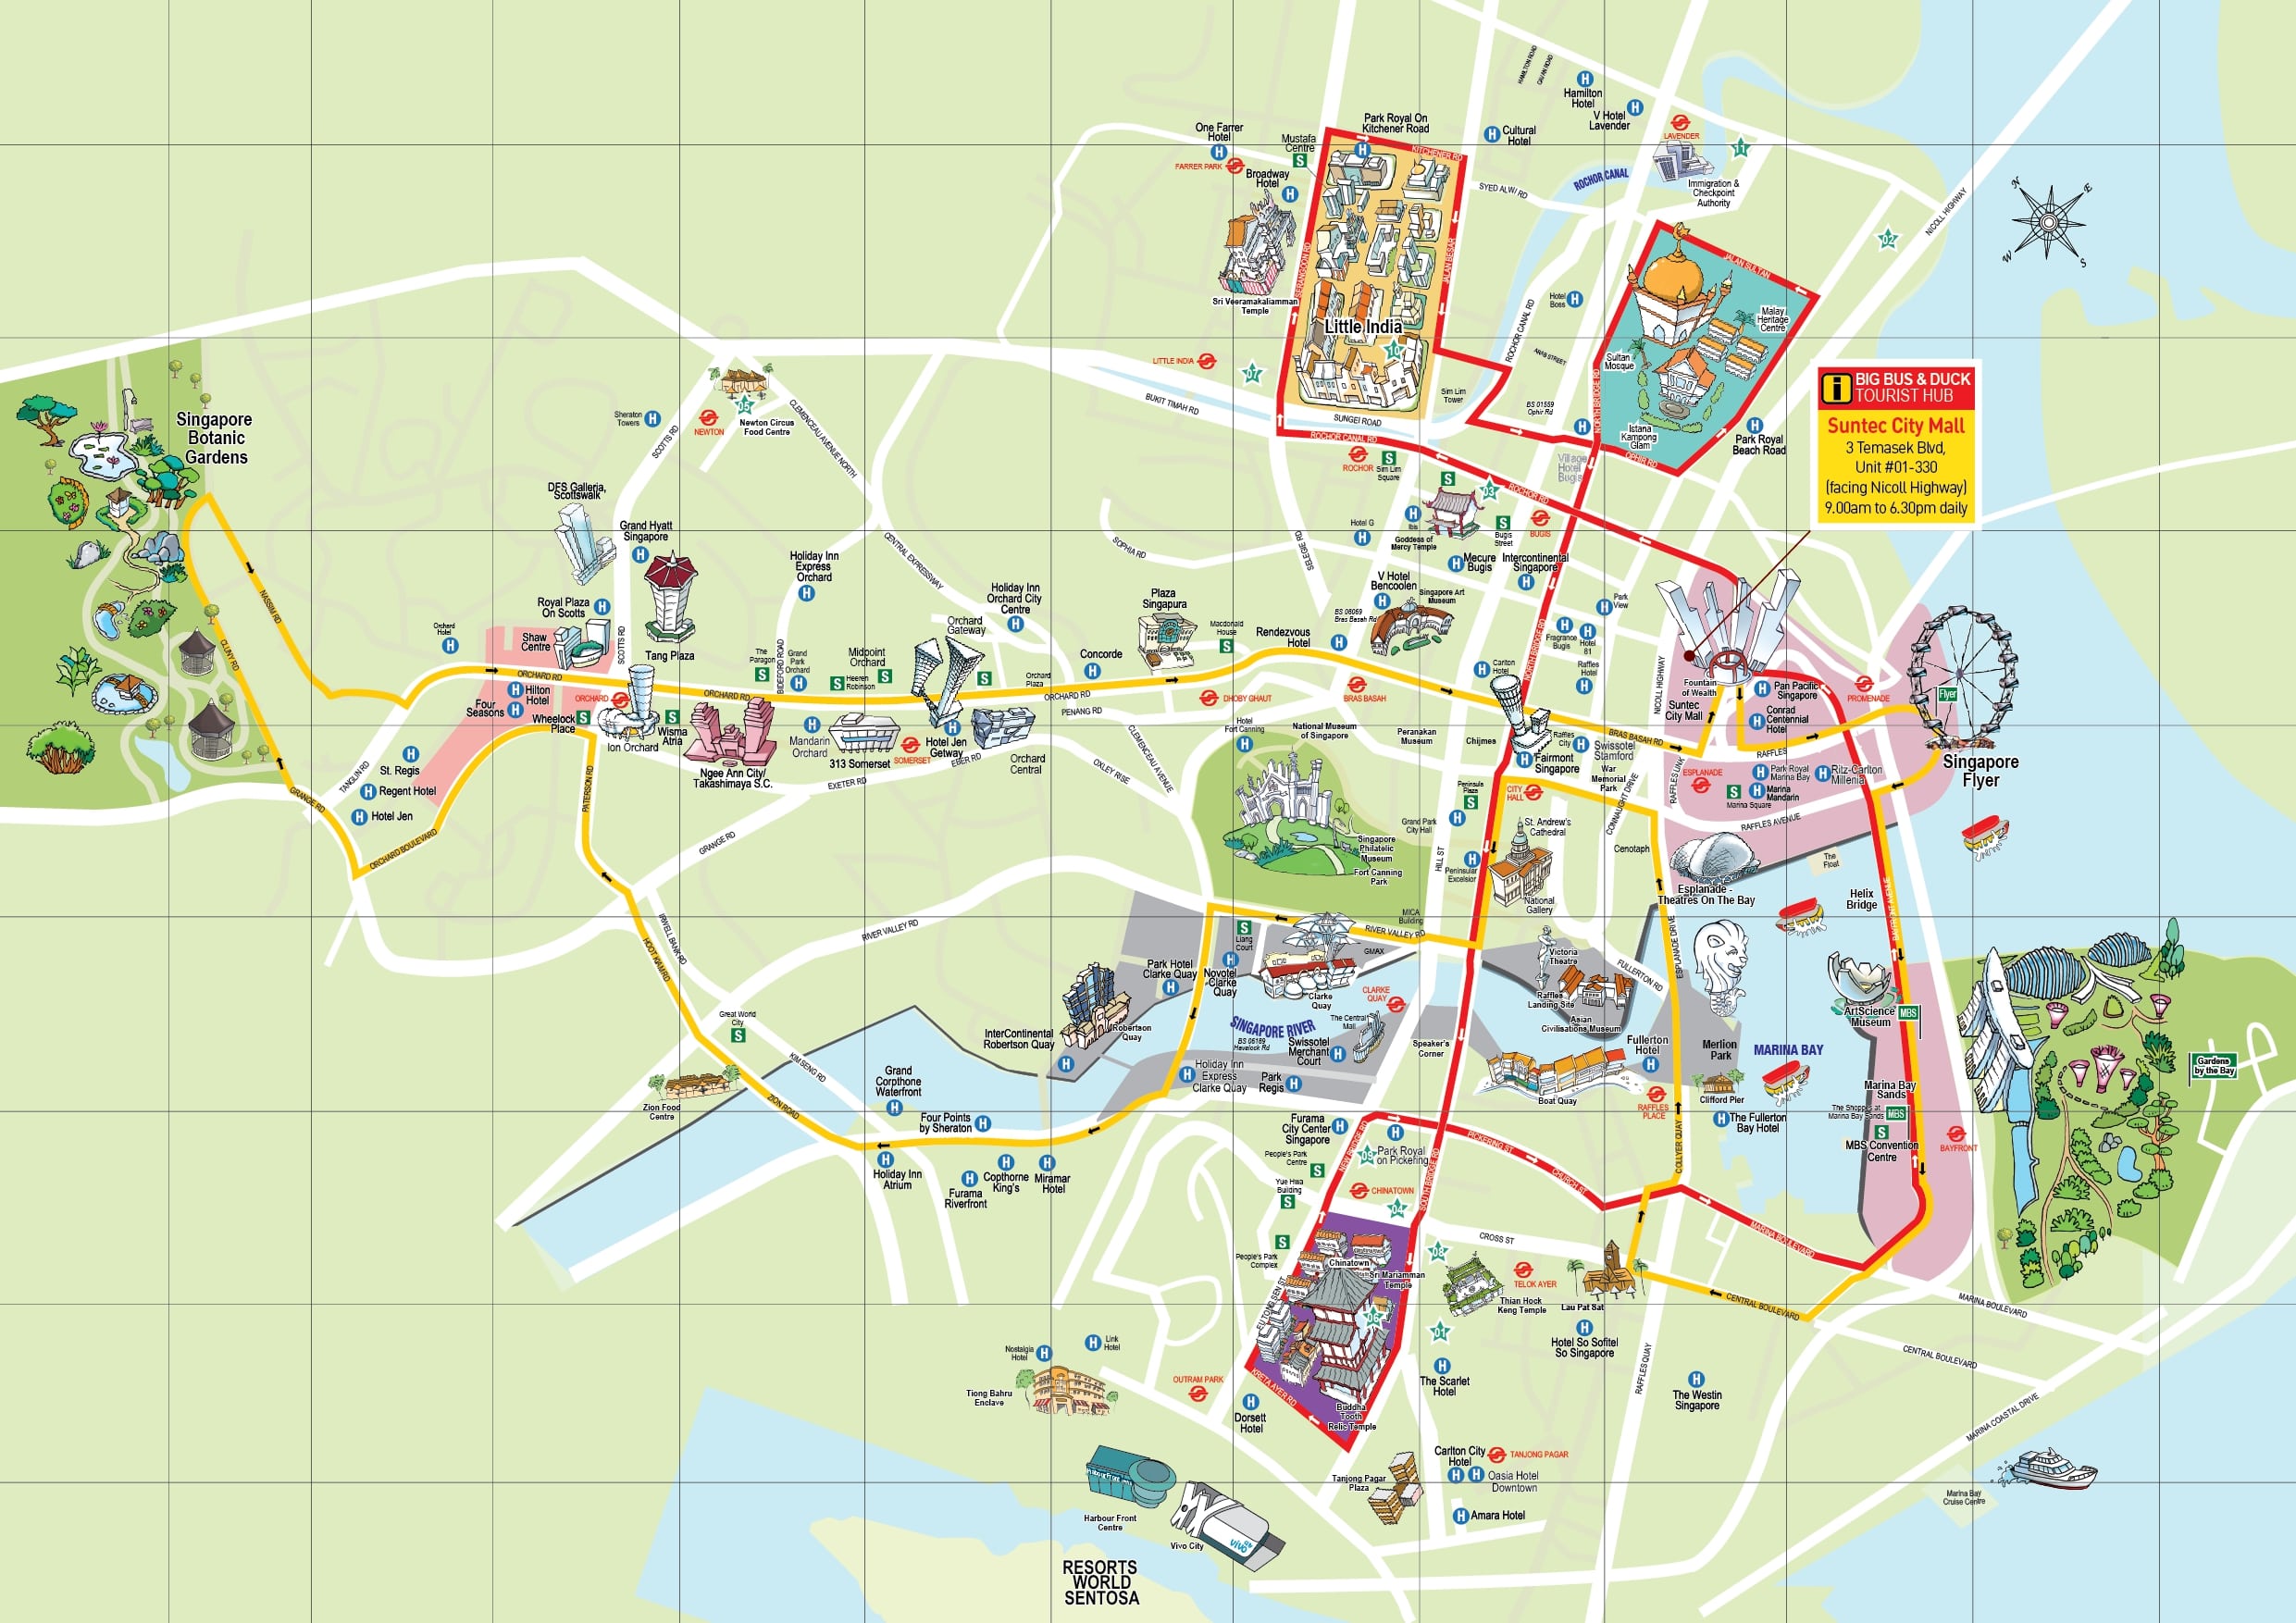 big bus tour map singapore